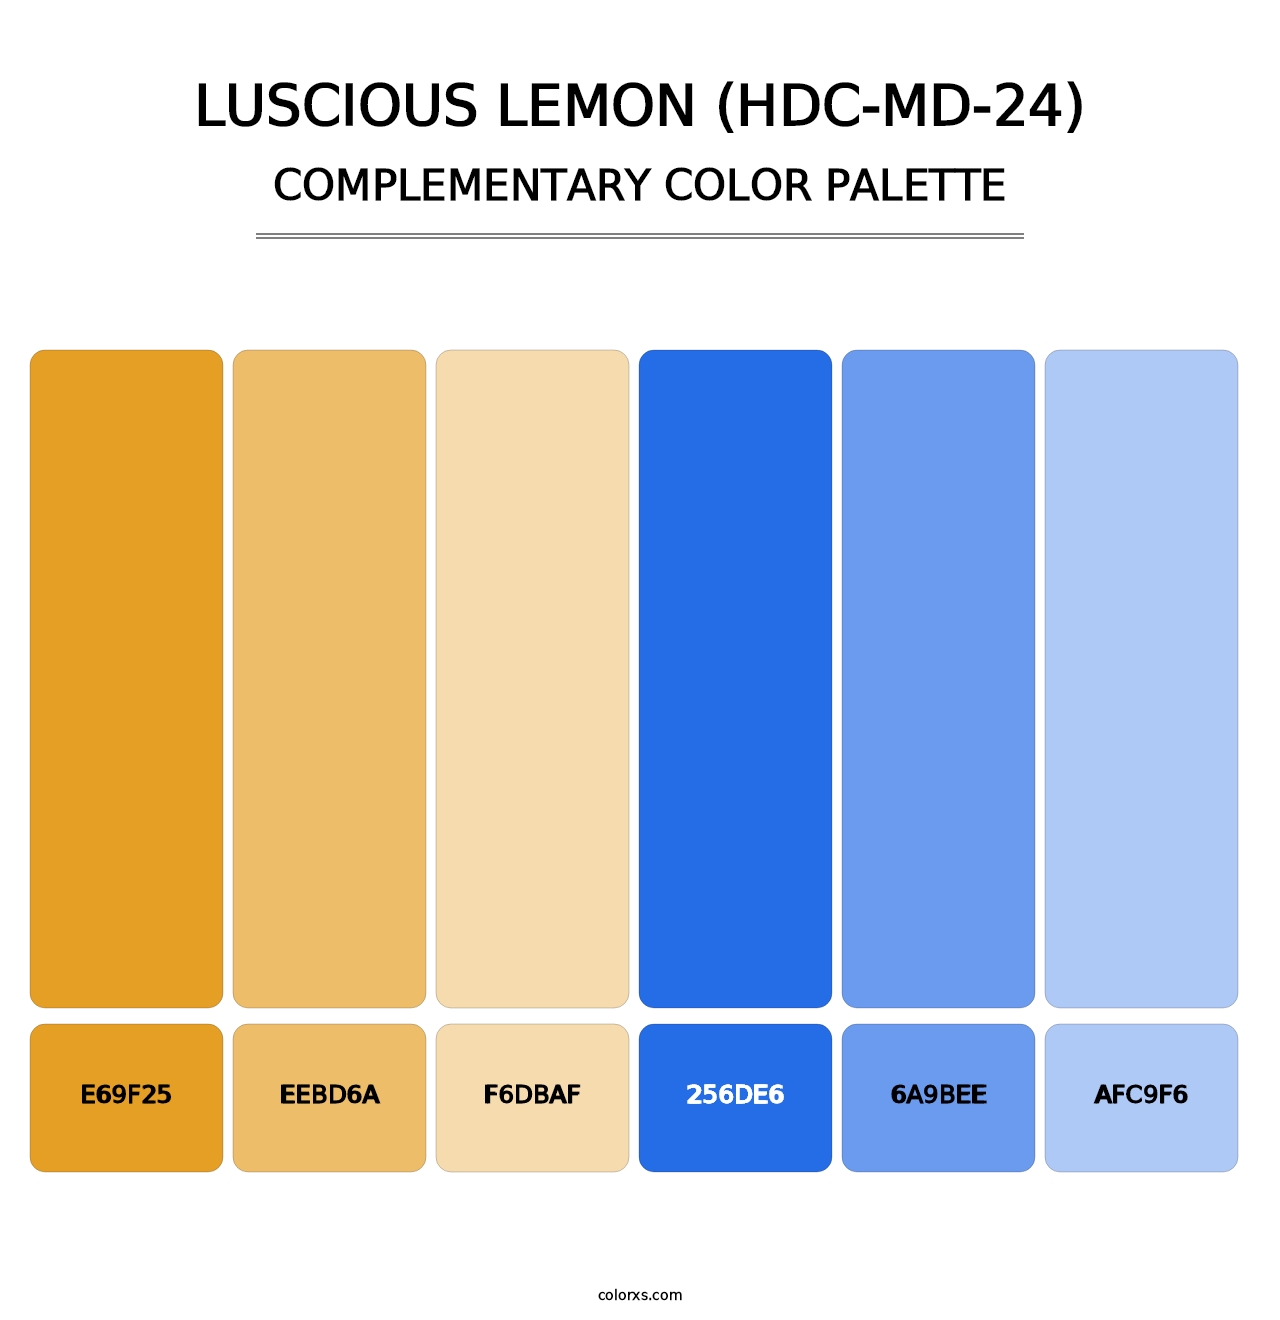 Luscious Lemon (HDC-MD-24) - Complementary Color Palette